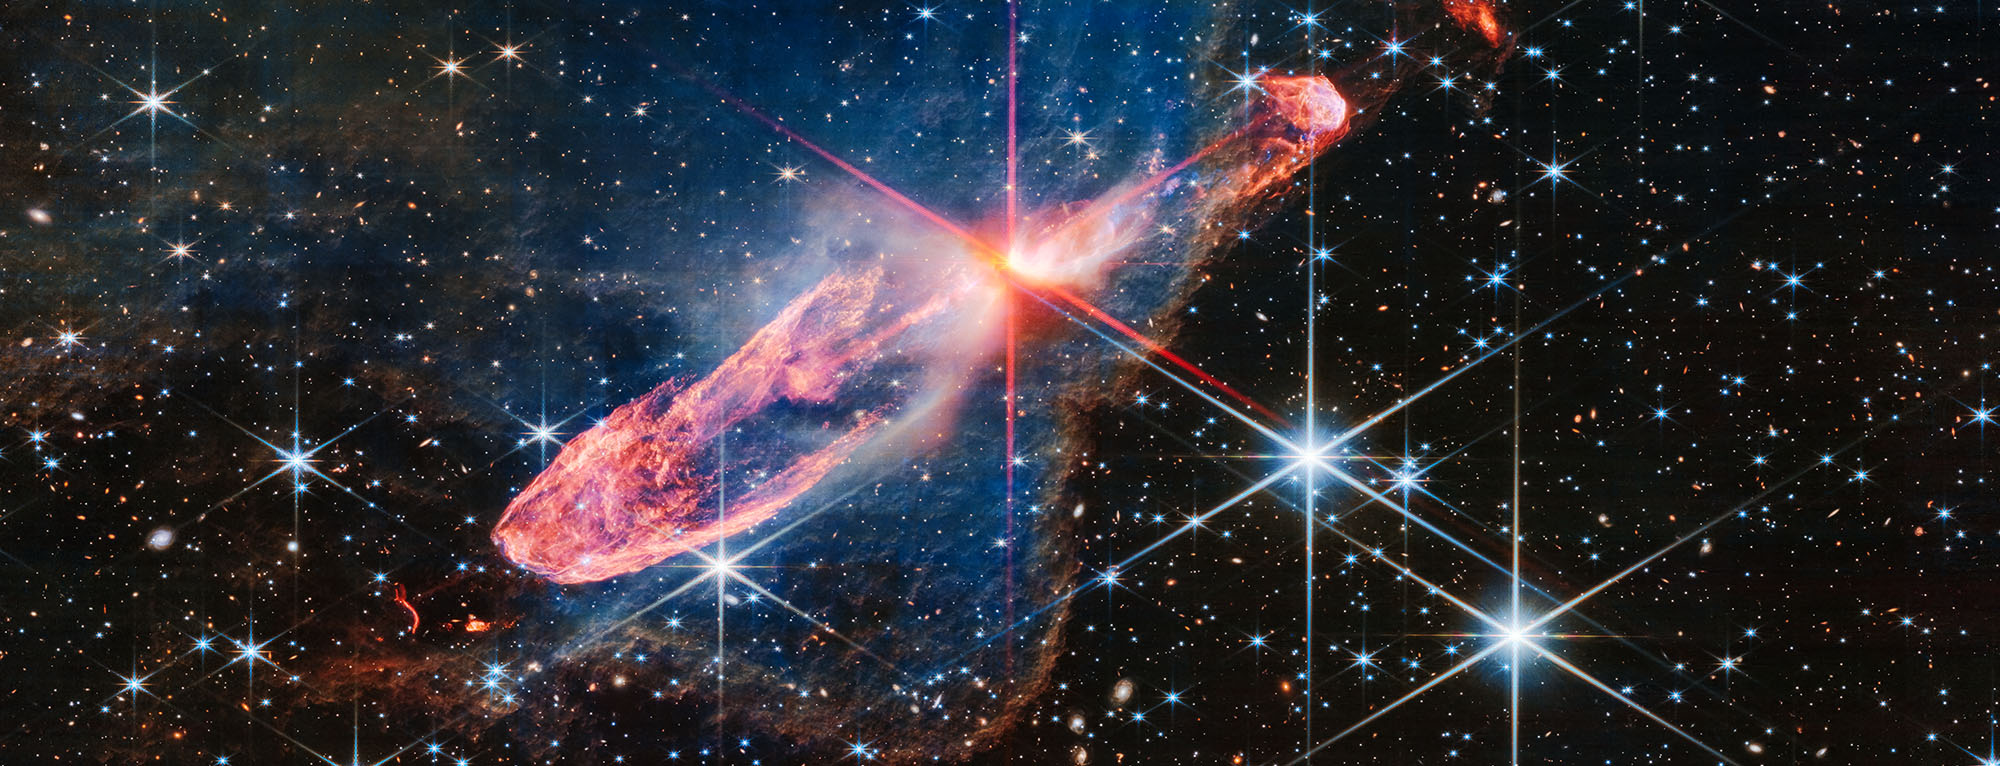 stars emerging from galaxy